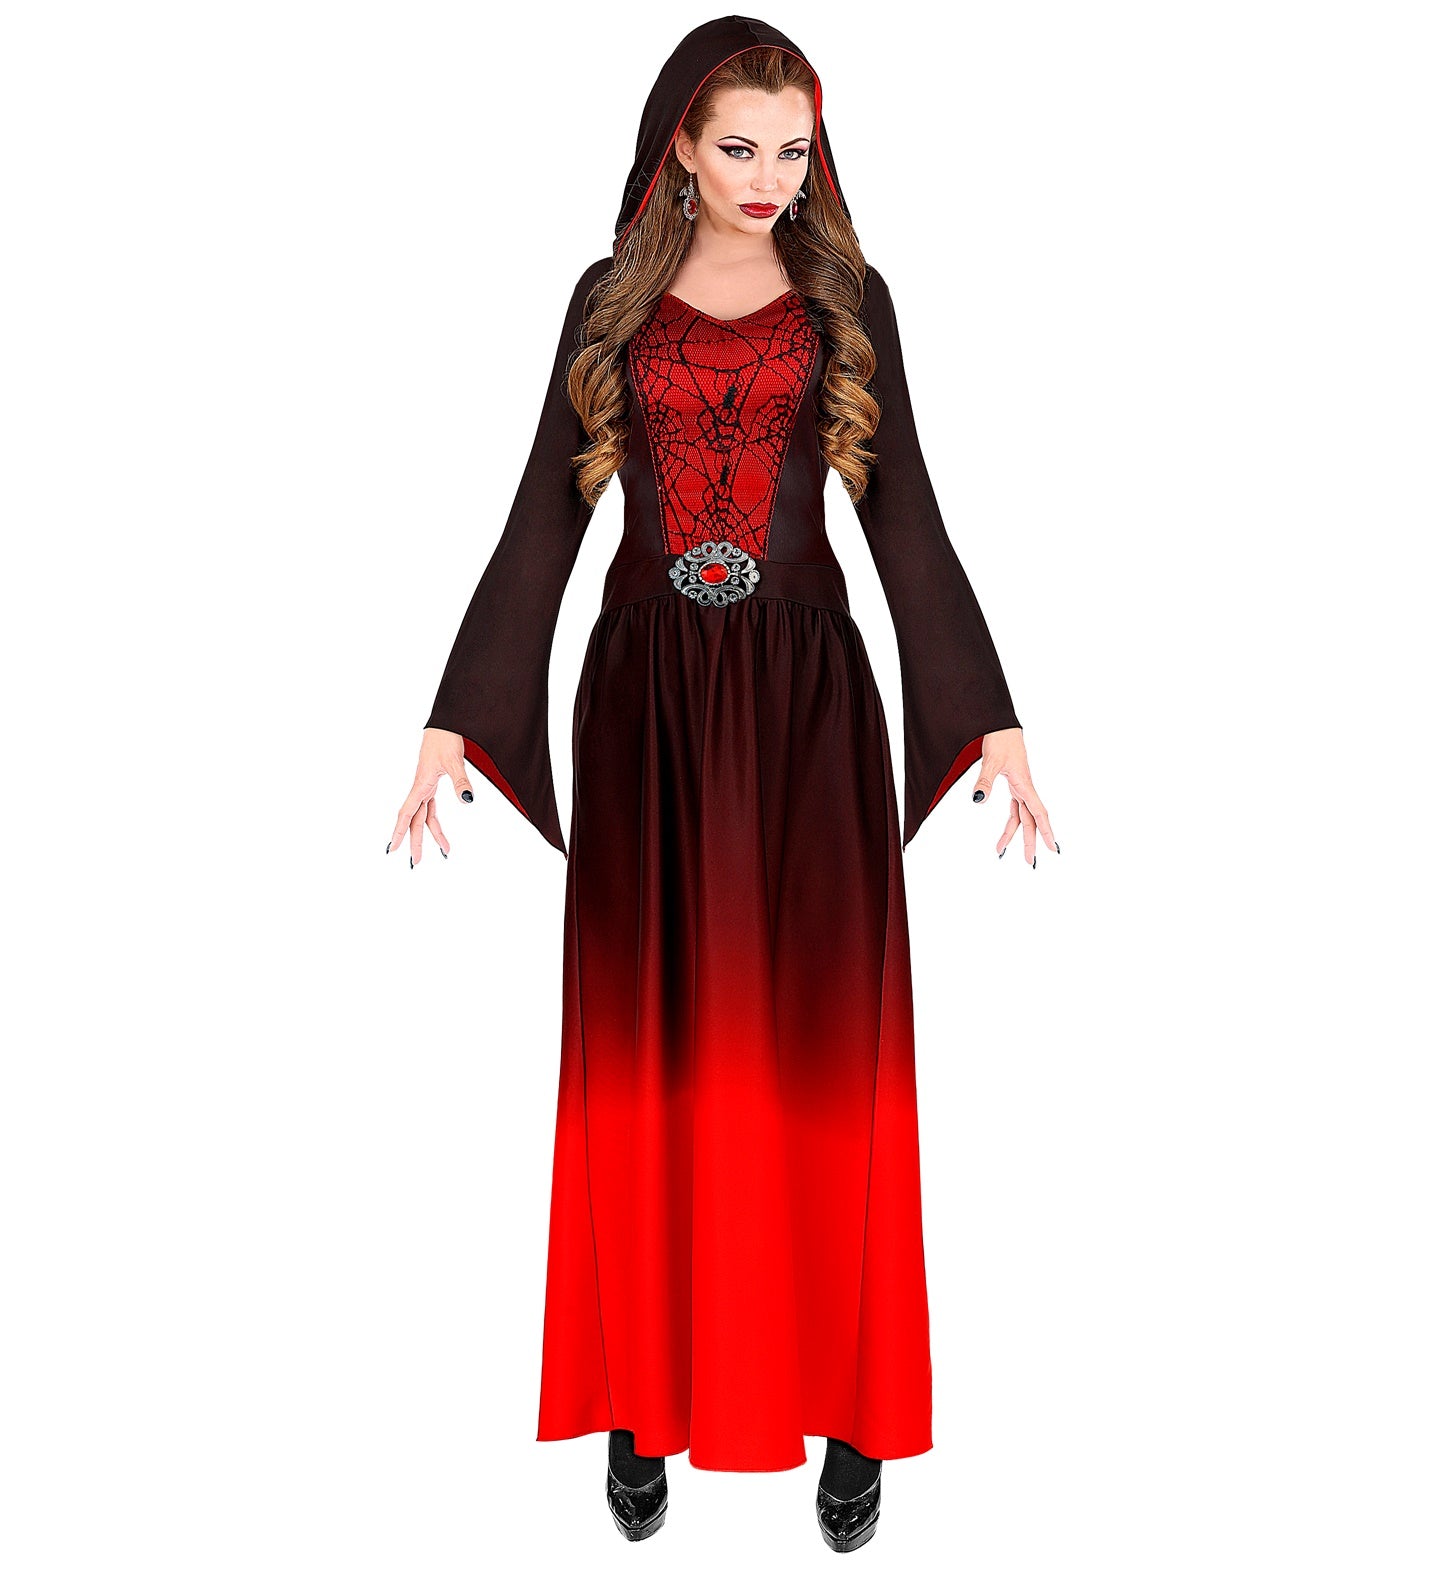 Gothic Lady Costume